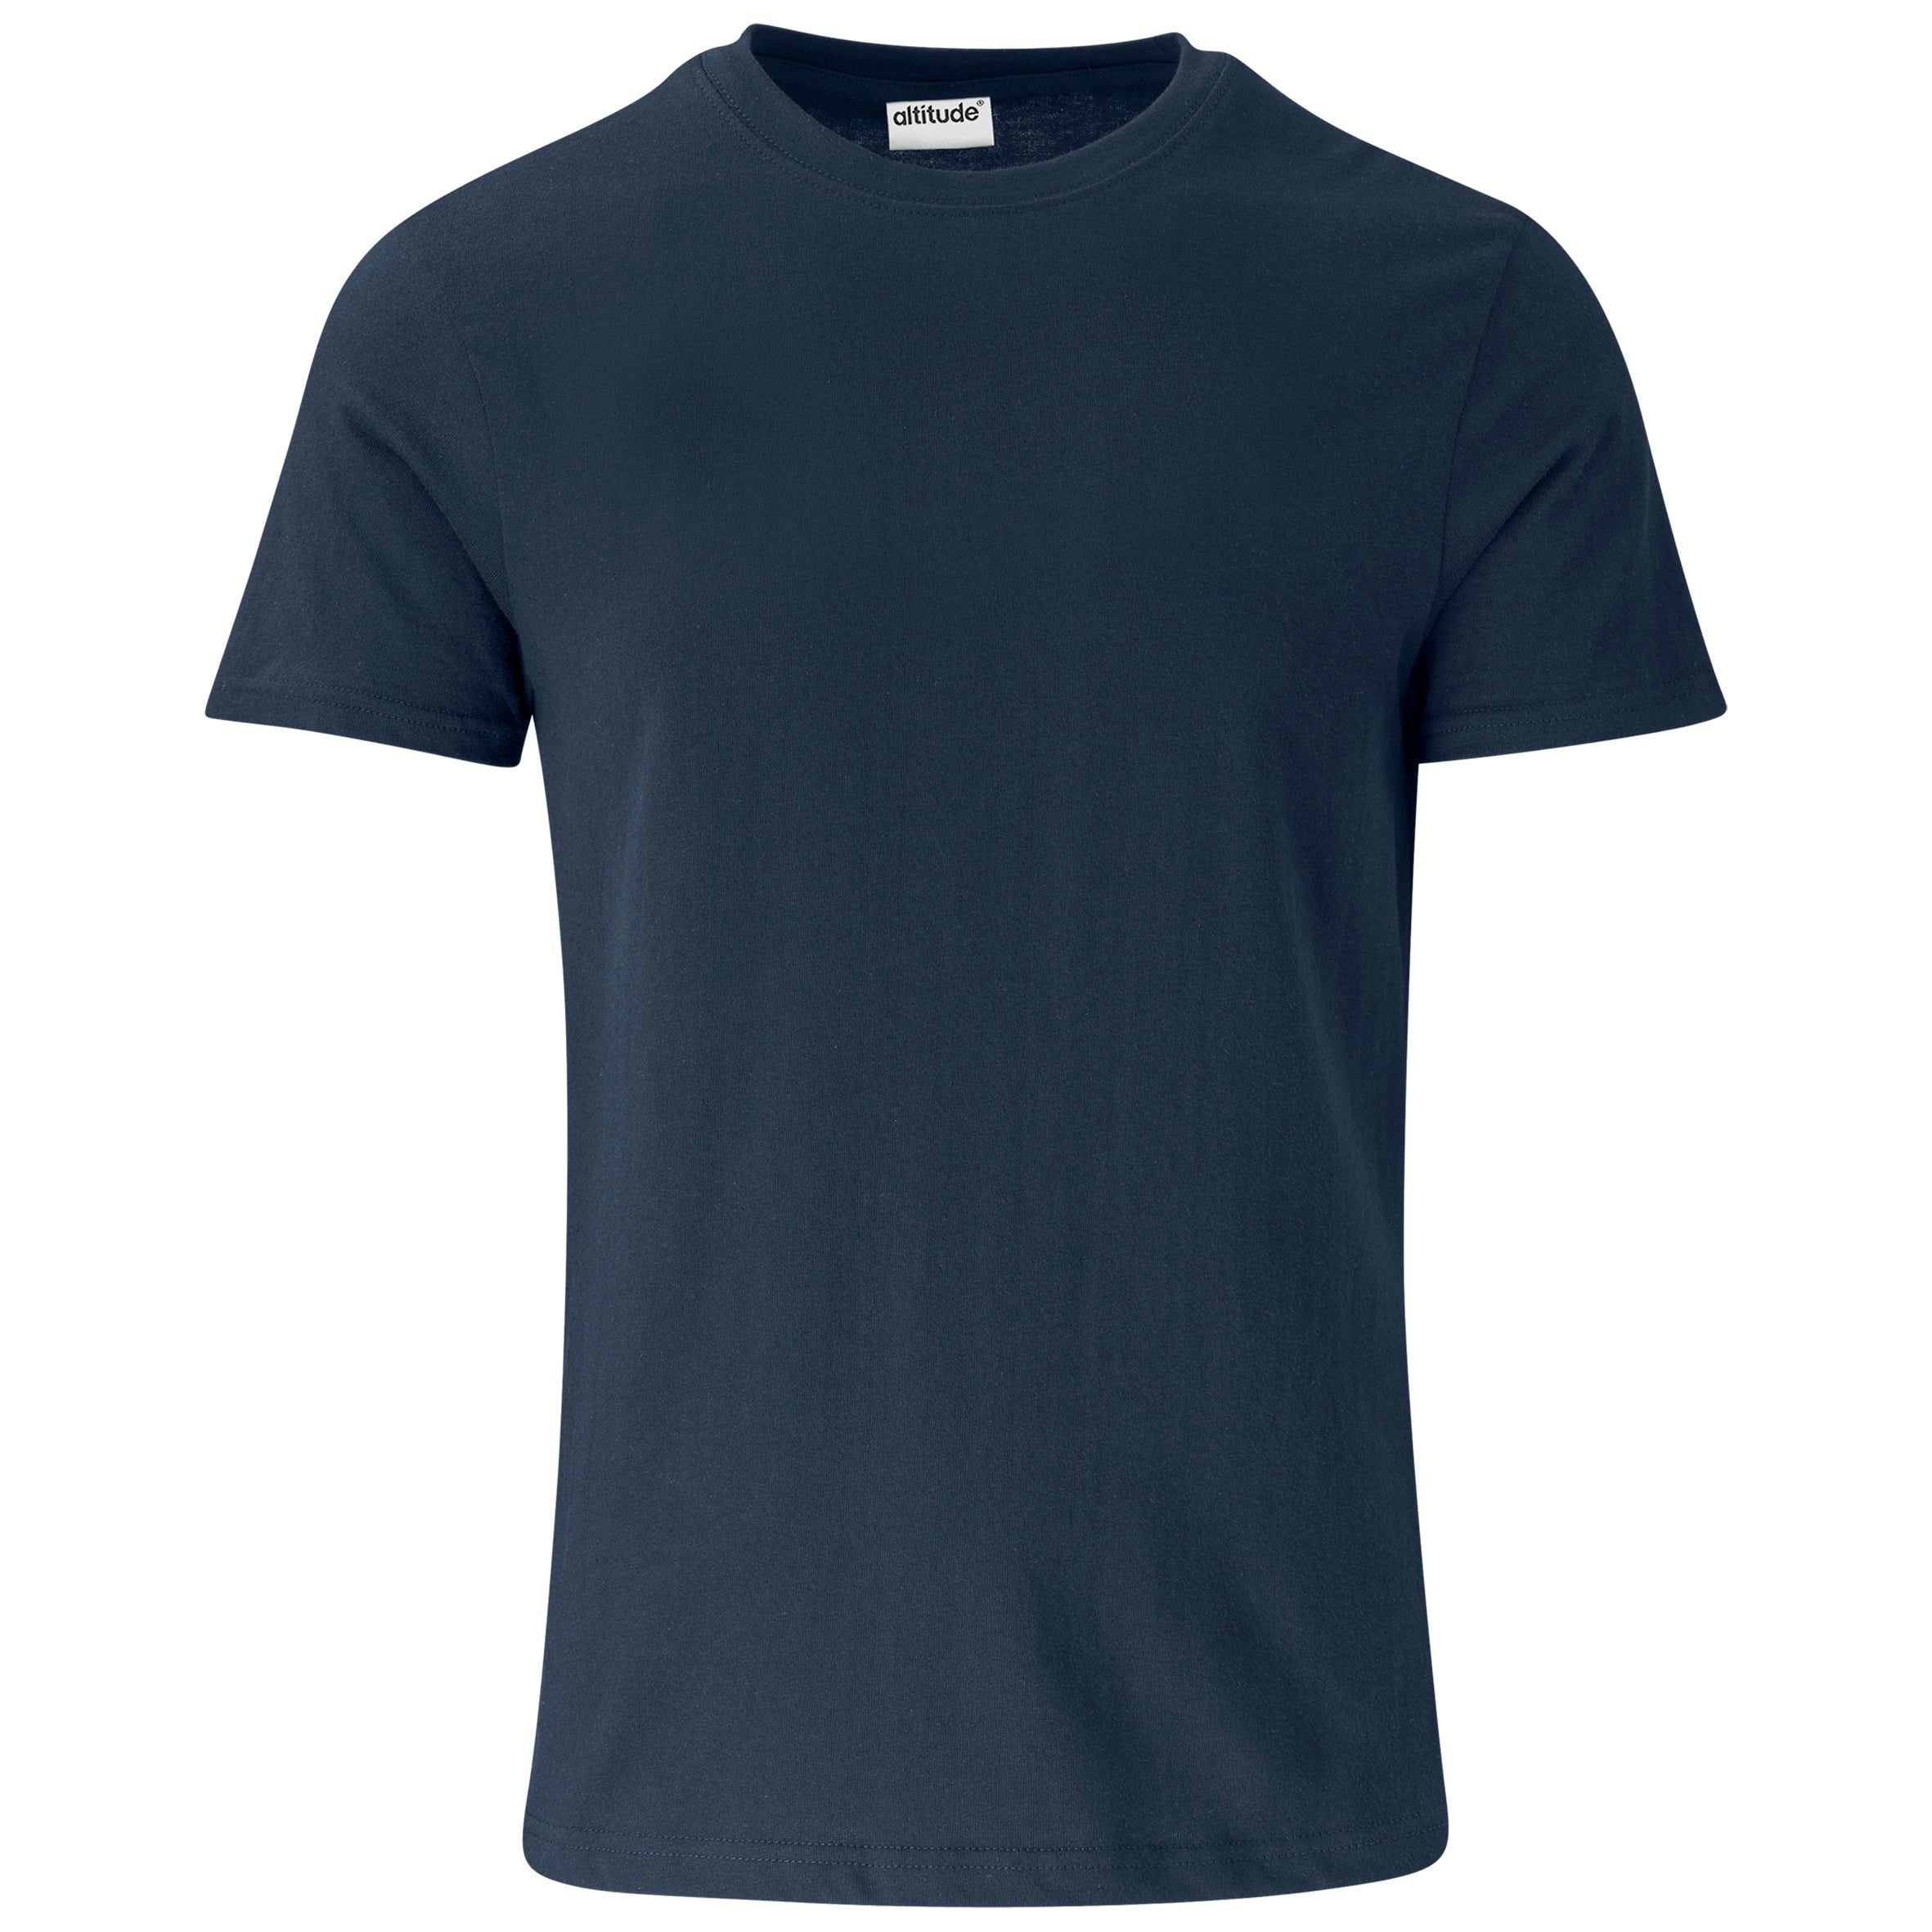 Unisex Promo T-shirt-2XL-Navy-N